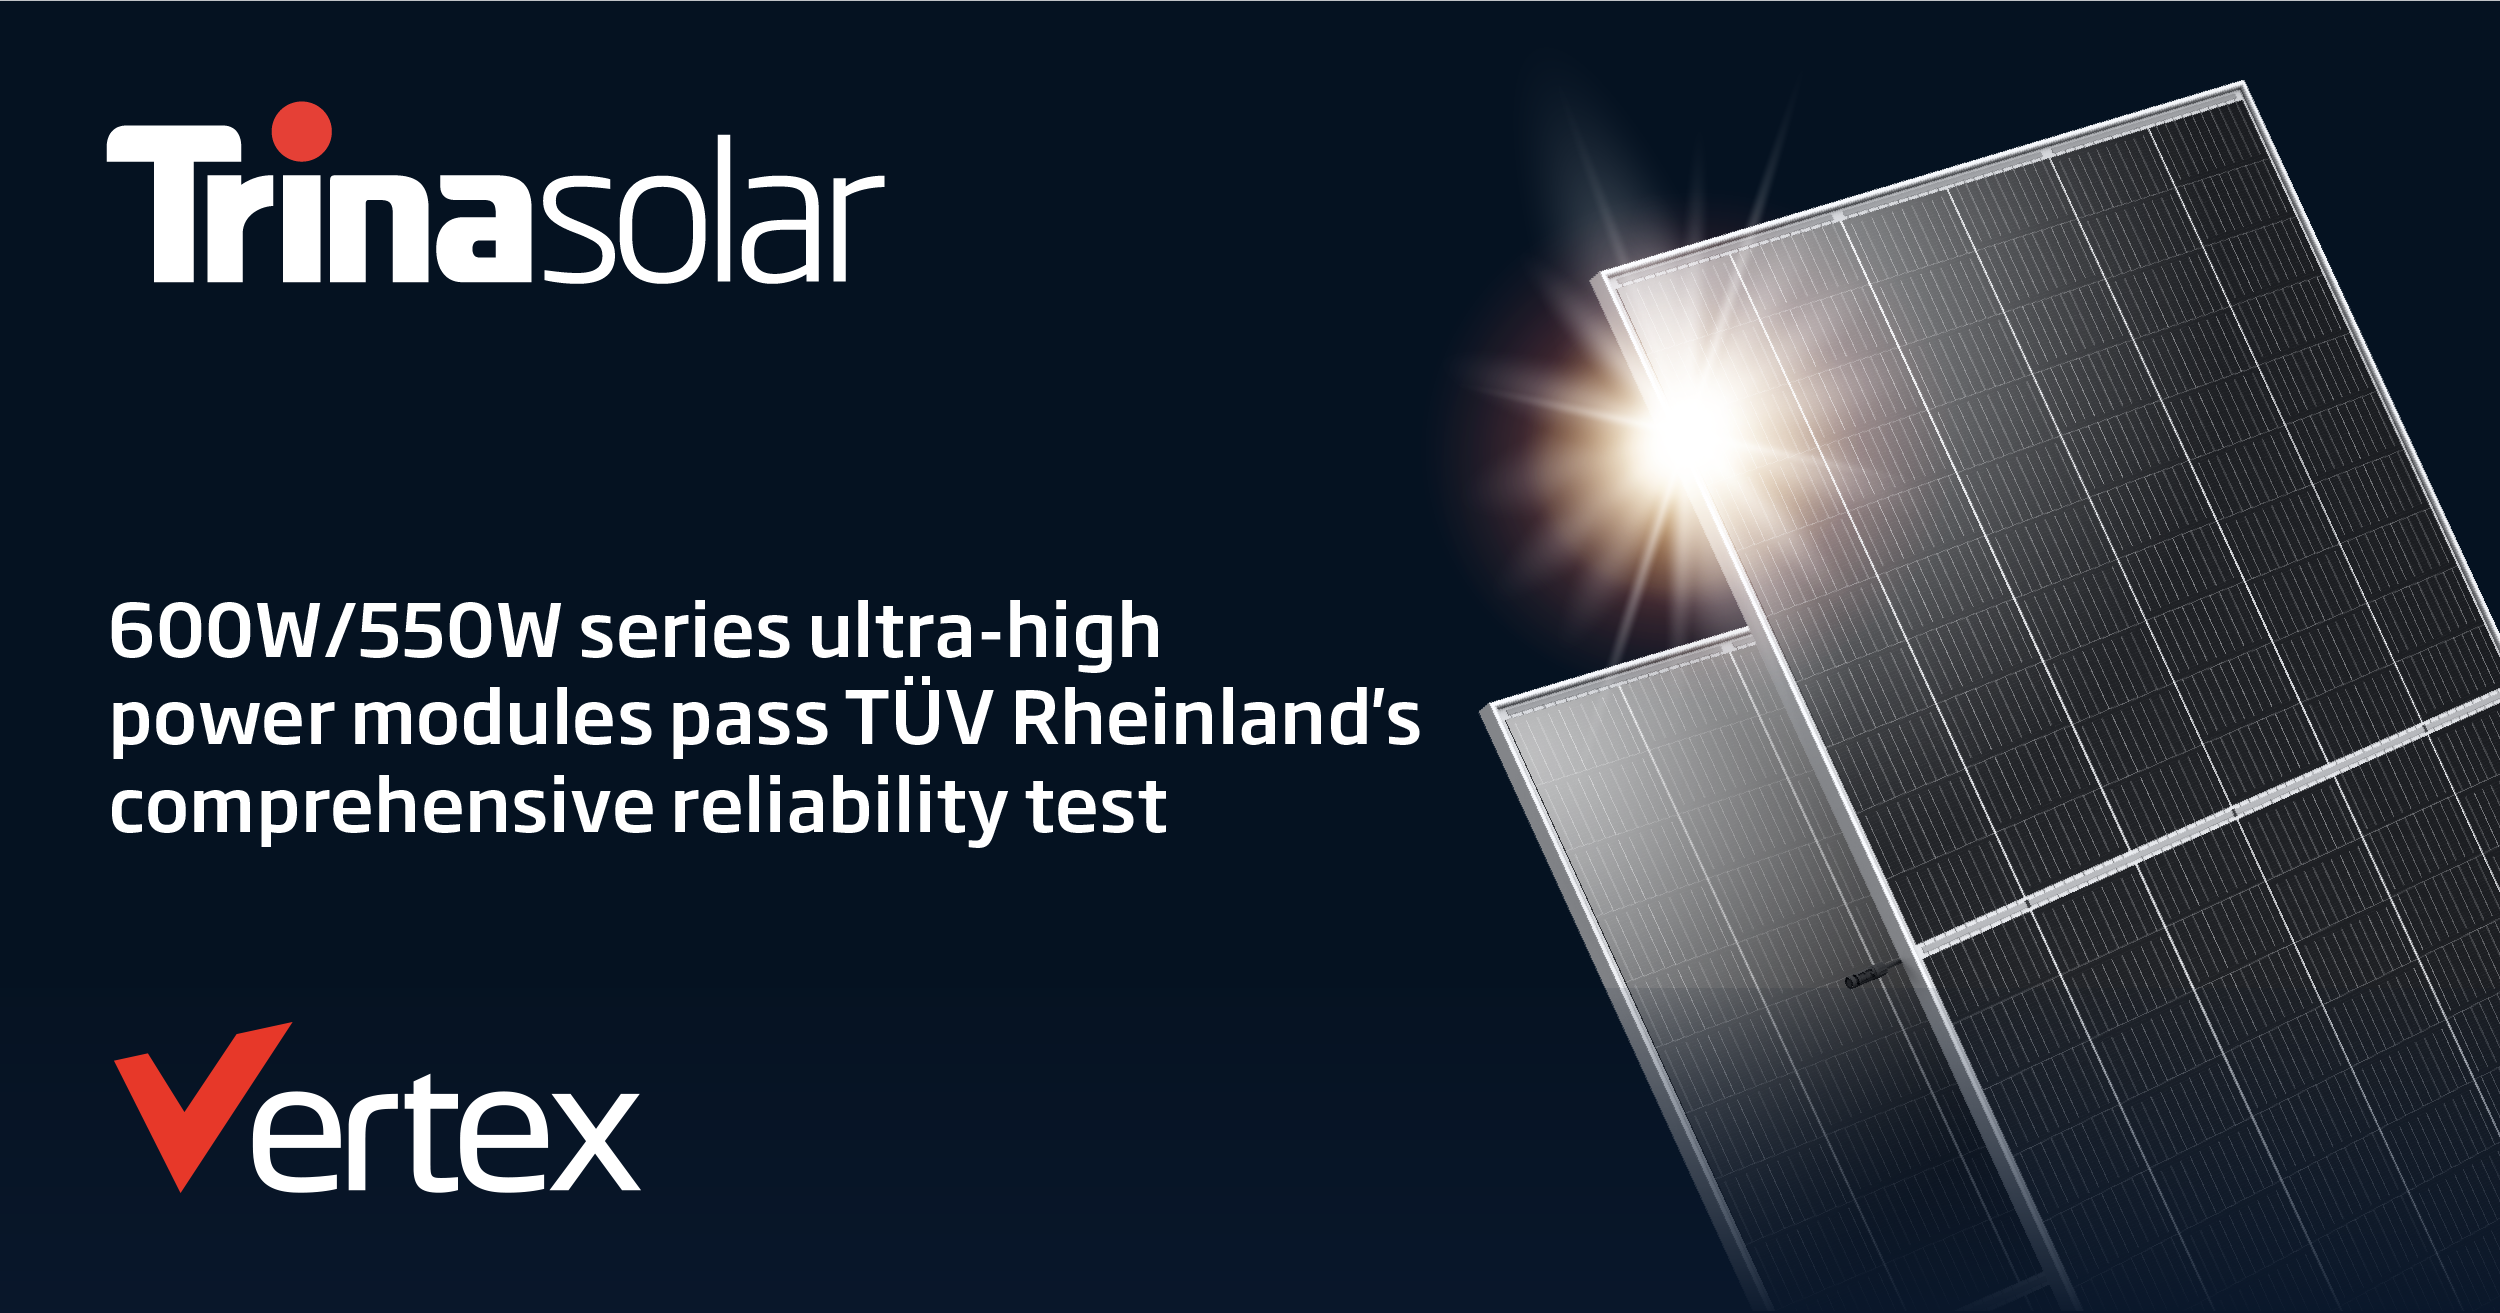 Image for Trina Solar’s Vertex 600w/550w Series Ultra-High Power Modules Pass Tüv Rheinland’s Comprehensive Reliability Test